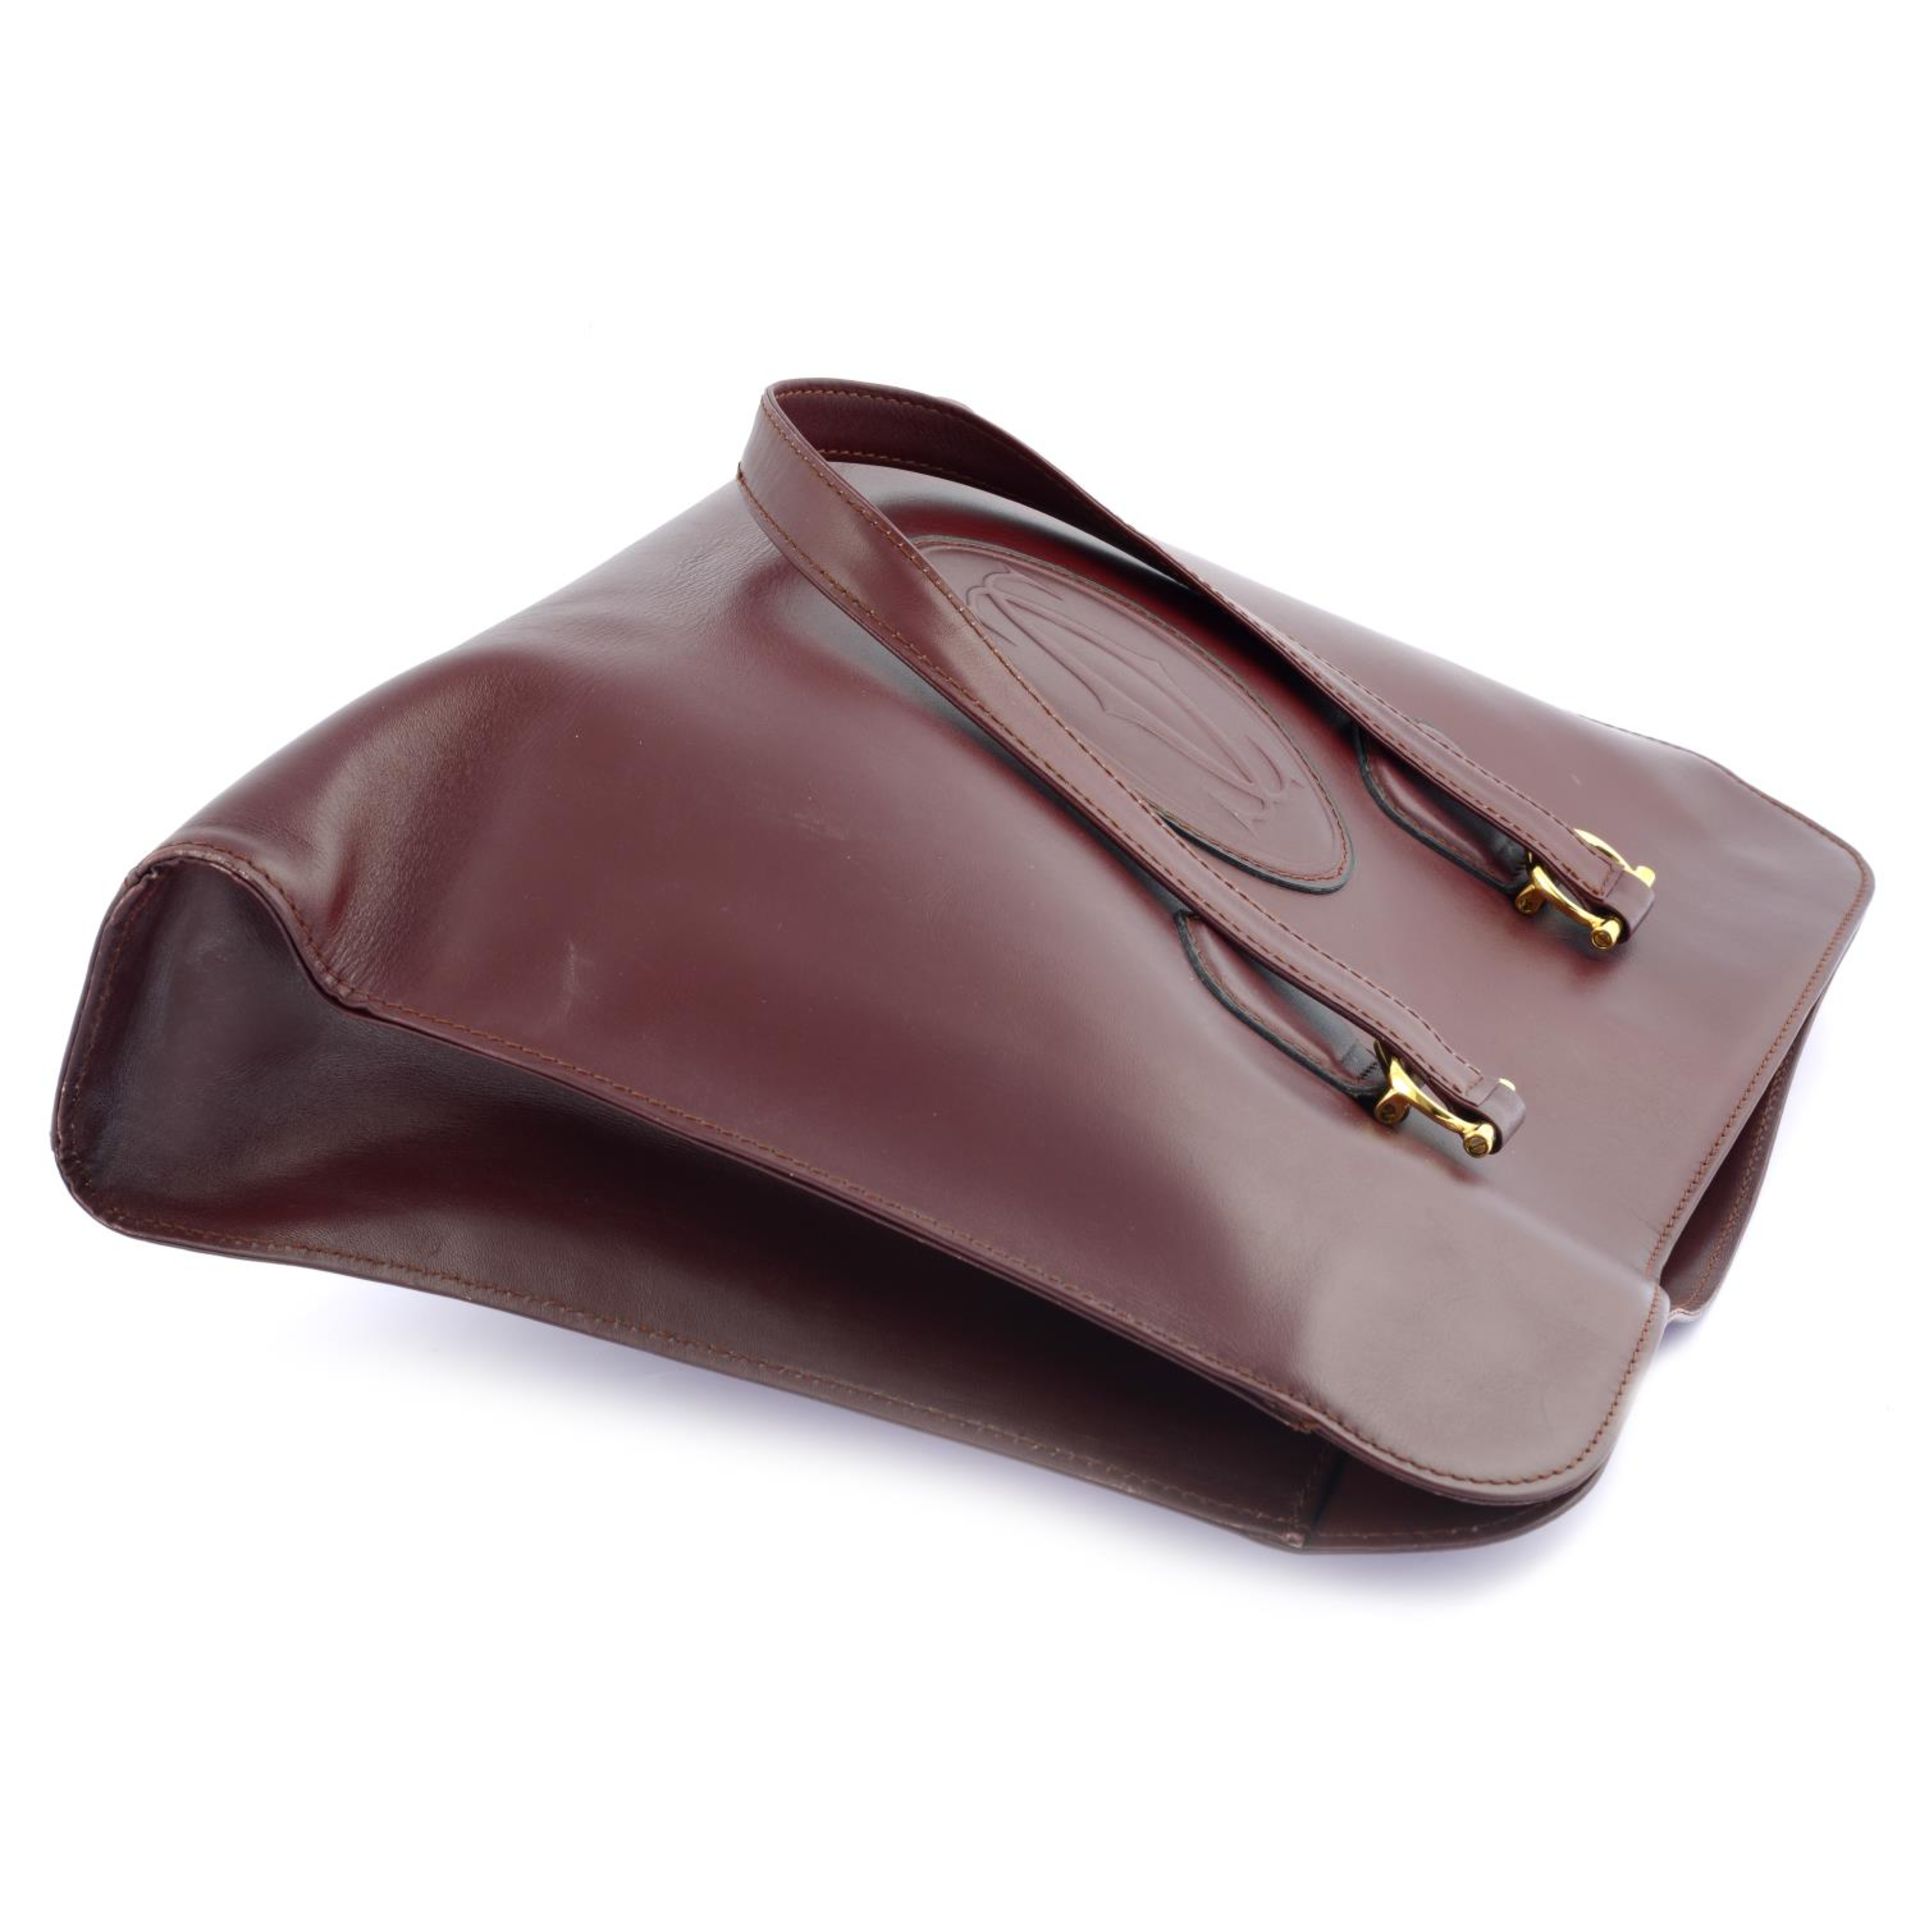 CARTIER - a burgundy leather Vintage Shopper handbag. - Bild 3 aus 4